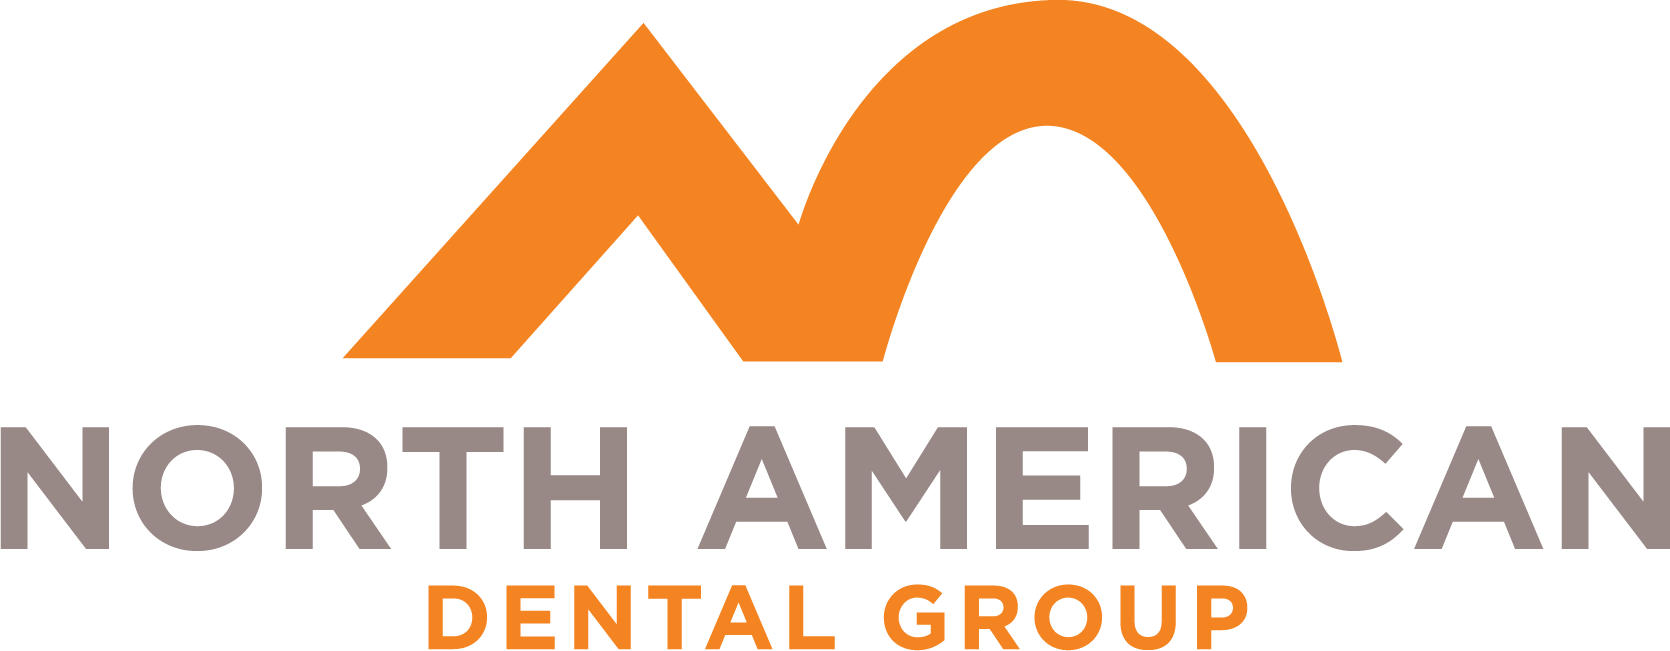 Image of North American dental group logo